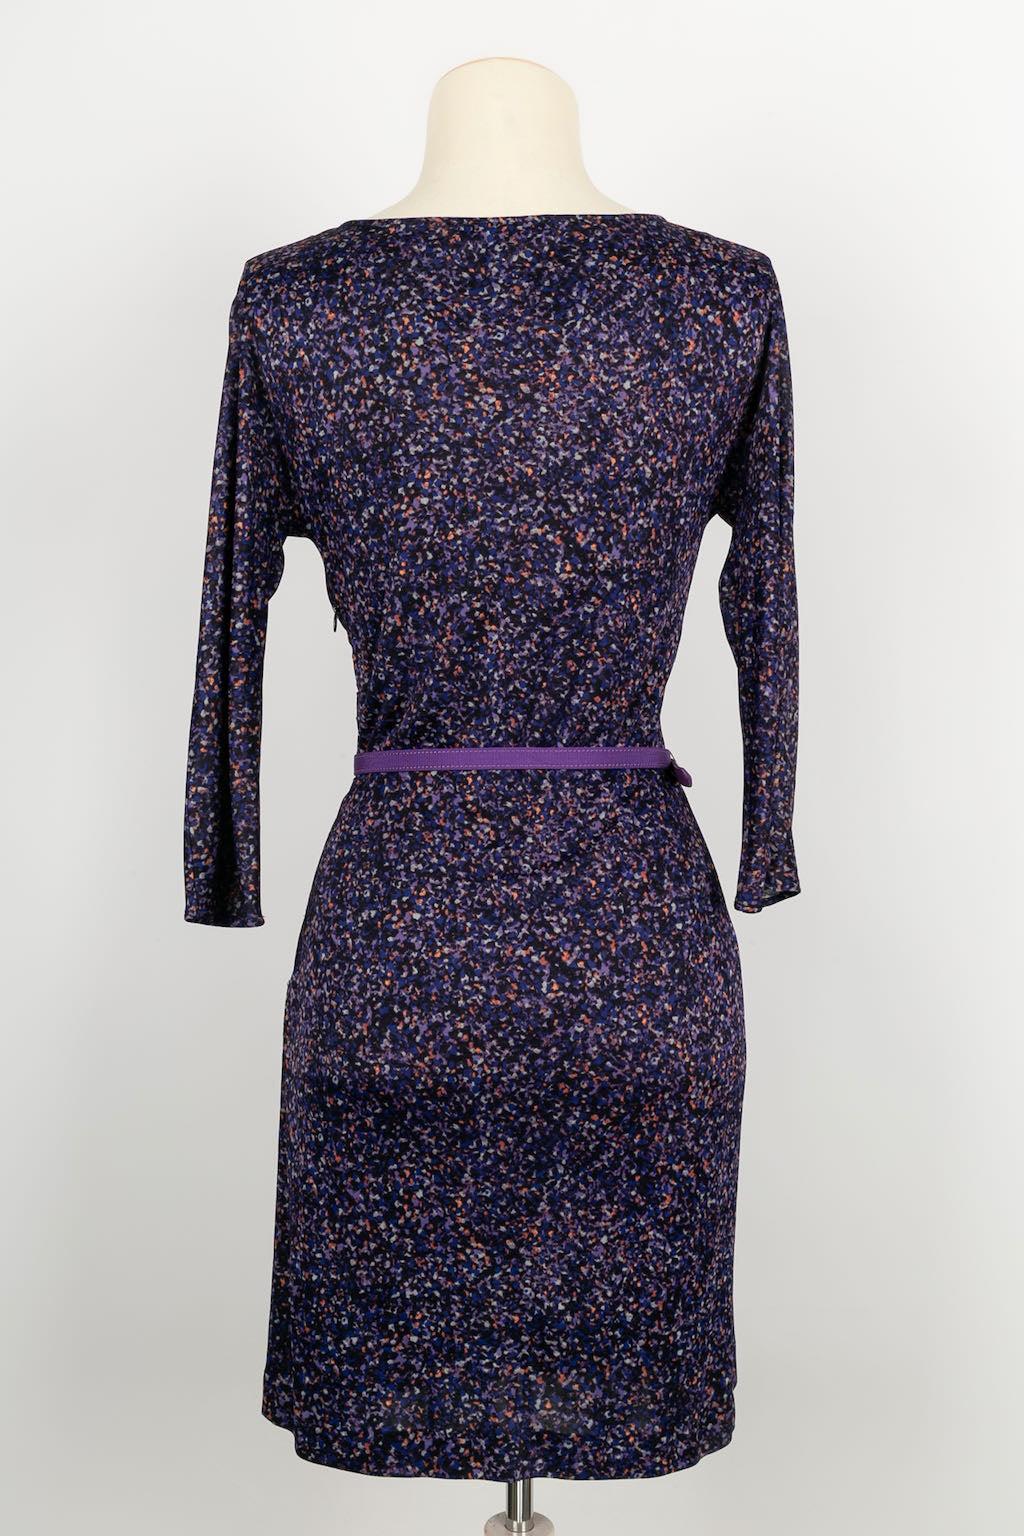 Black Christian Dior Purple Jersey Dress, Size 38FR For Sale